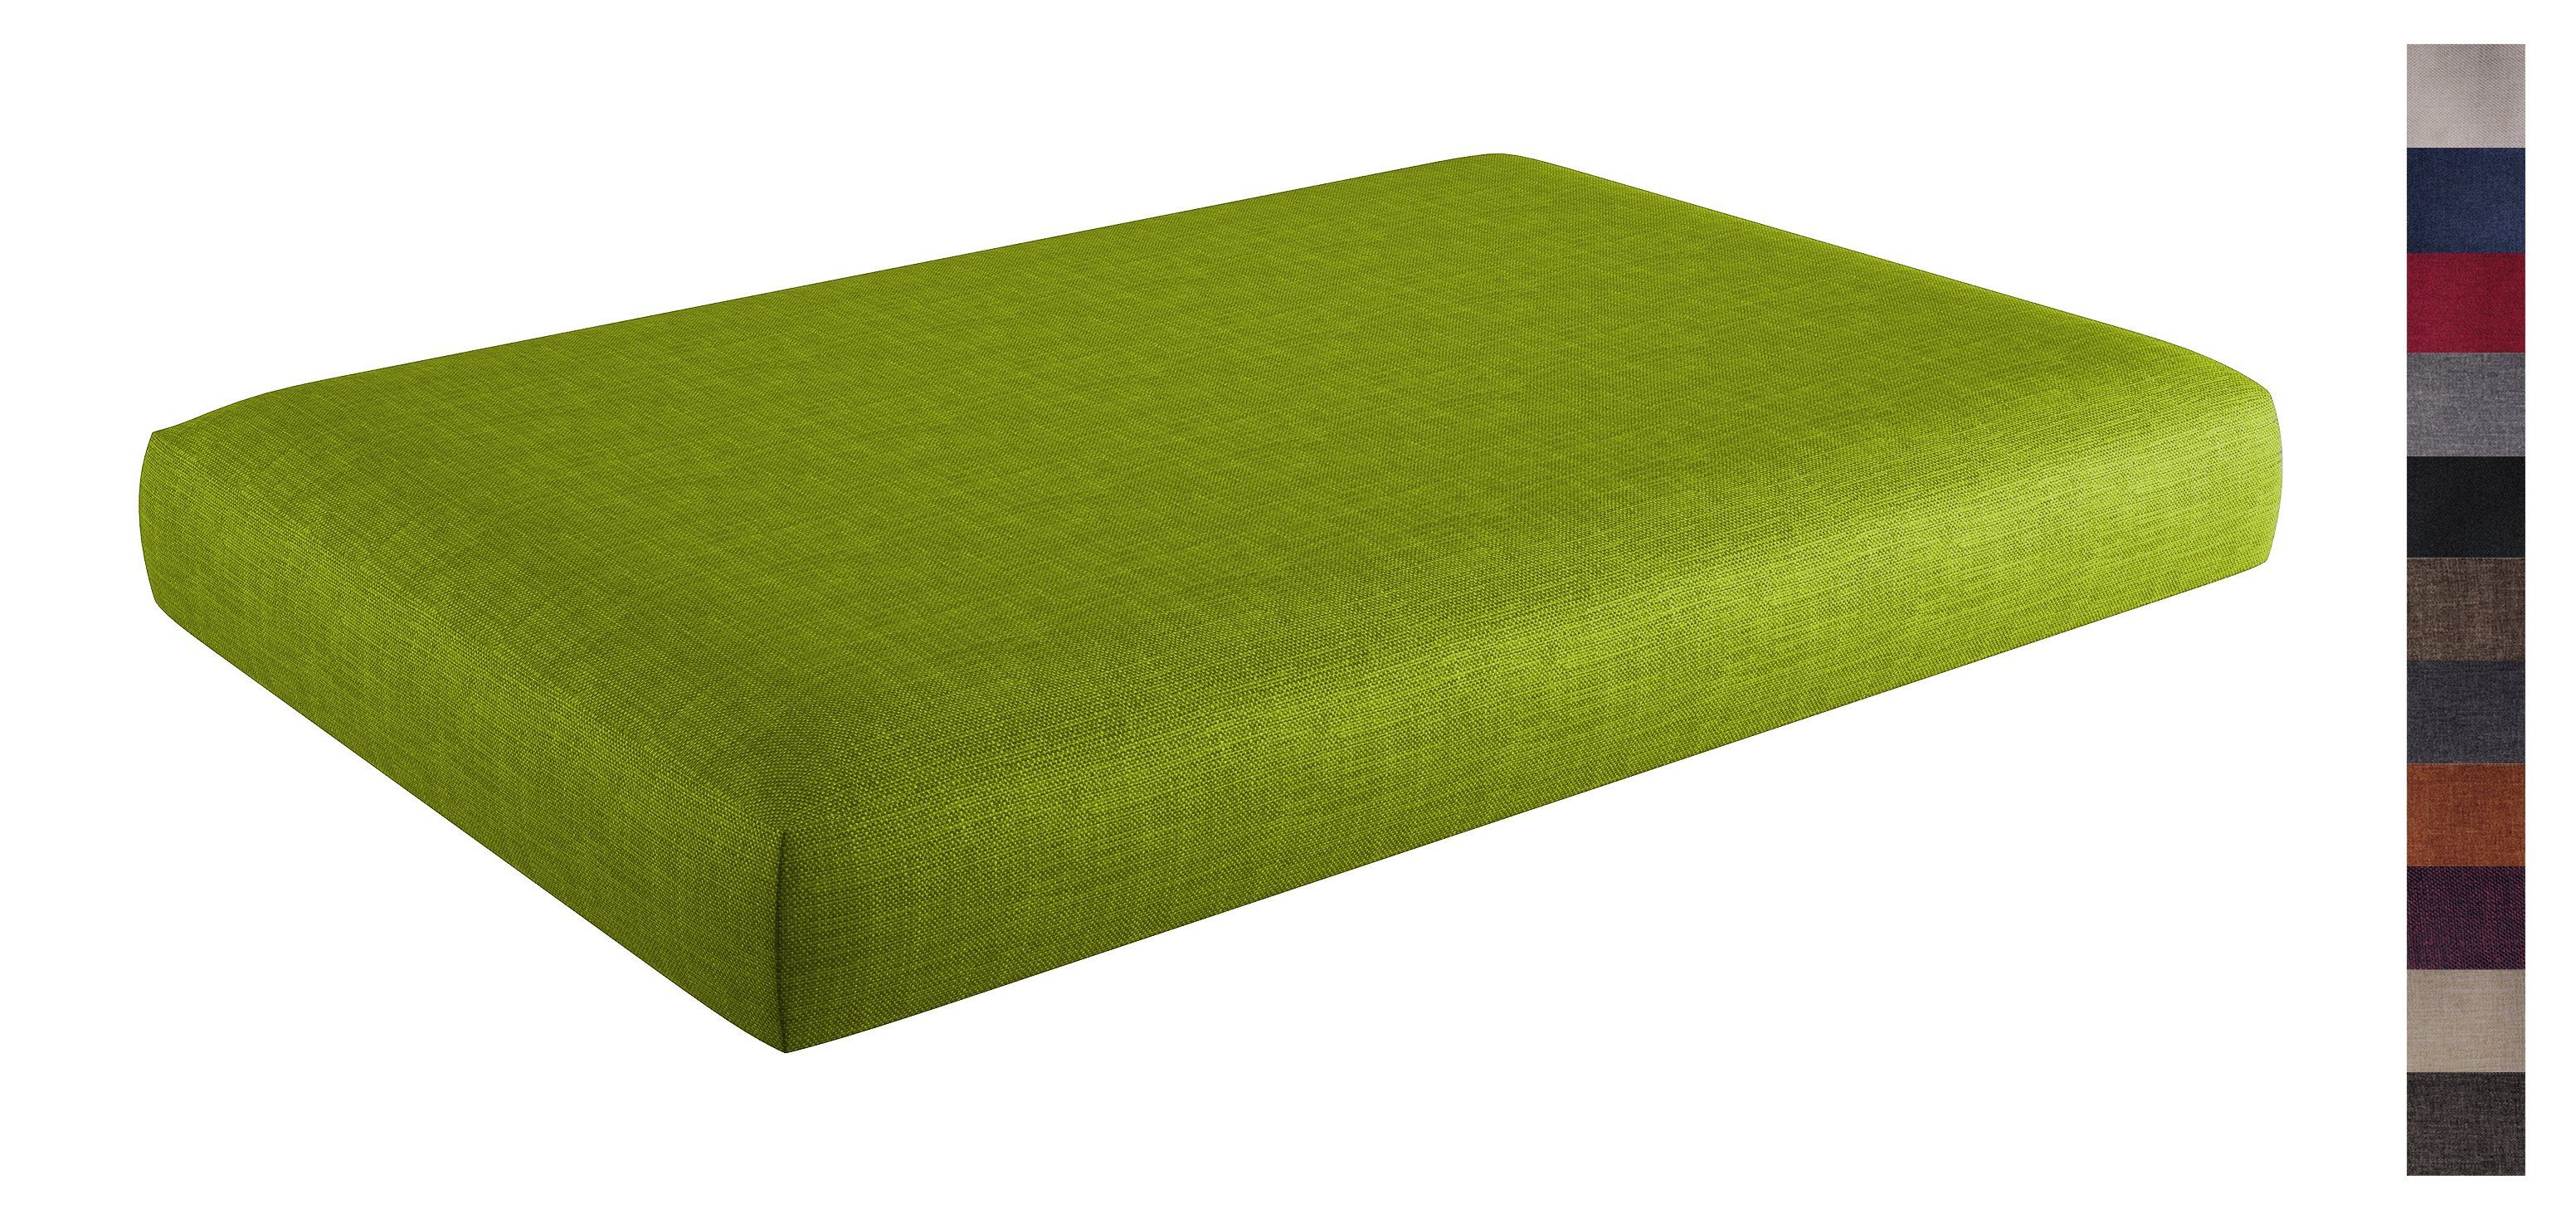 120x80x15cm, Palettenkissen mit Sitzkissen Grün sunnypillow Bezug abnehmbarem Sitzkissen